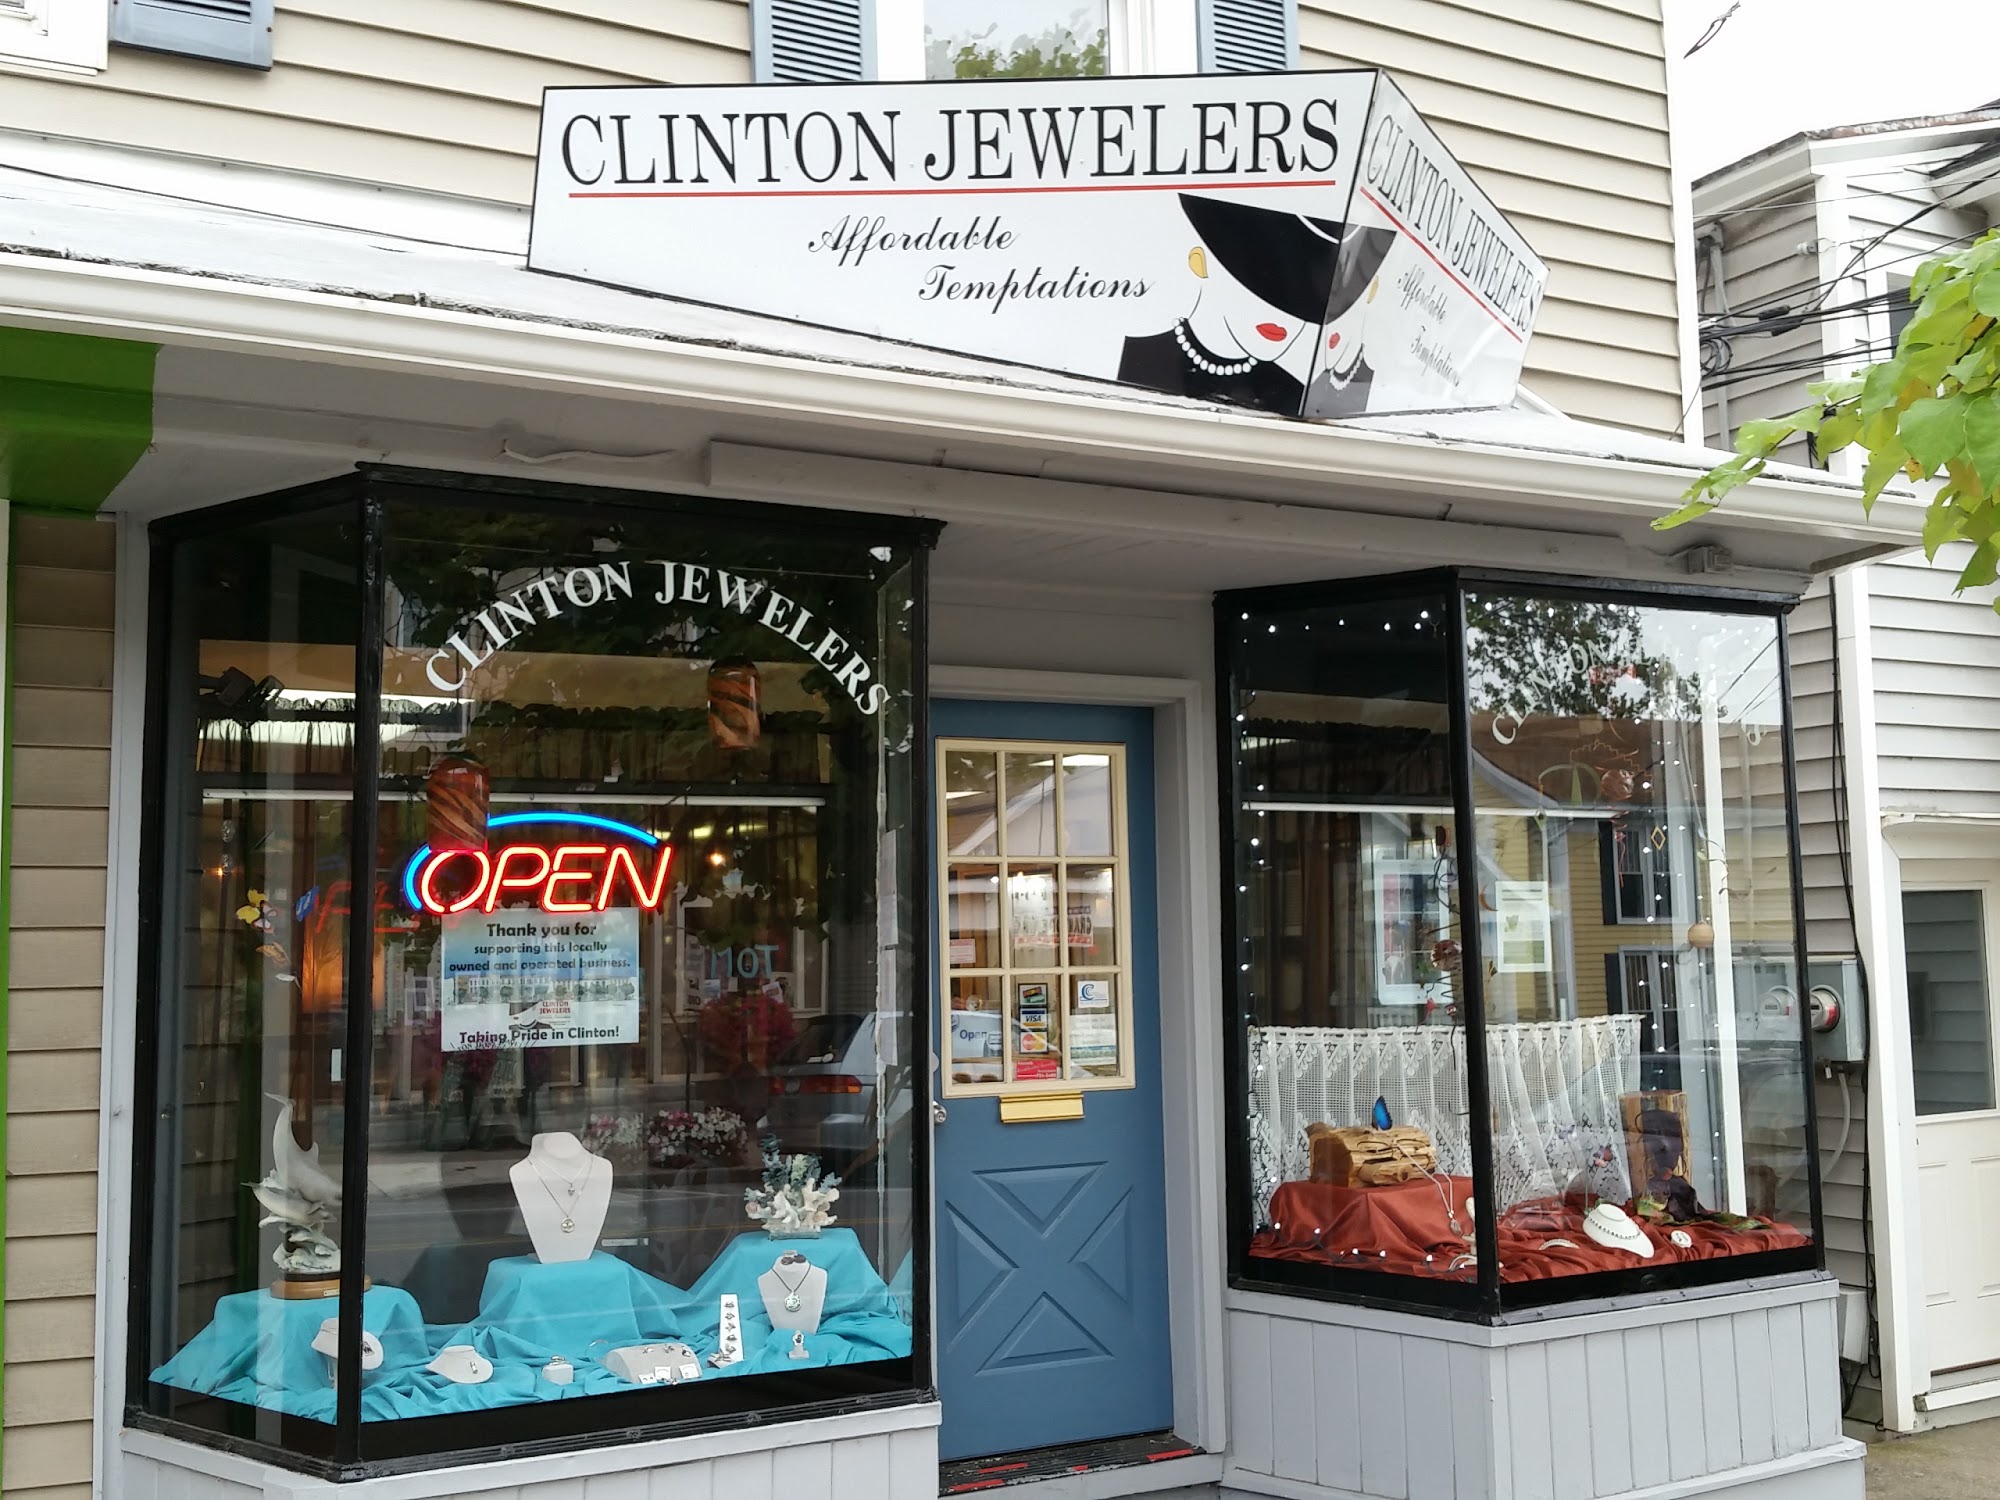 Clinton Jewelers